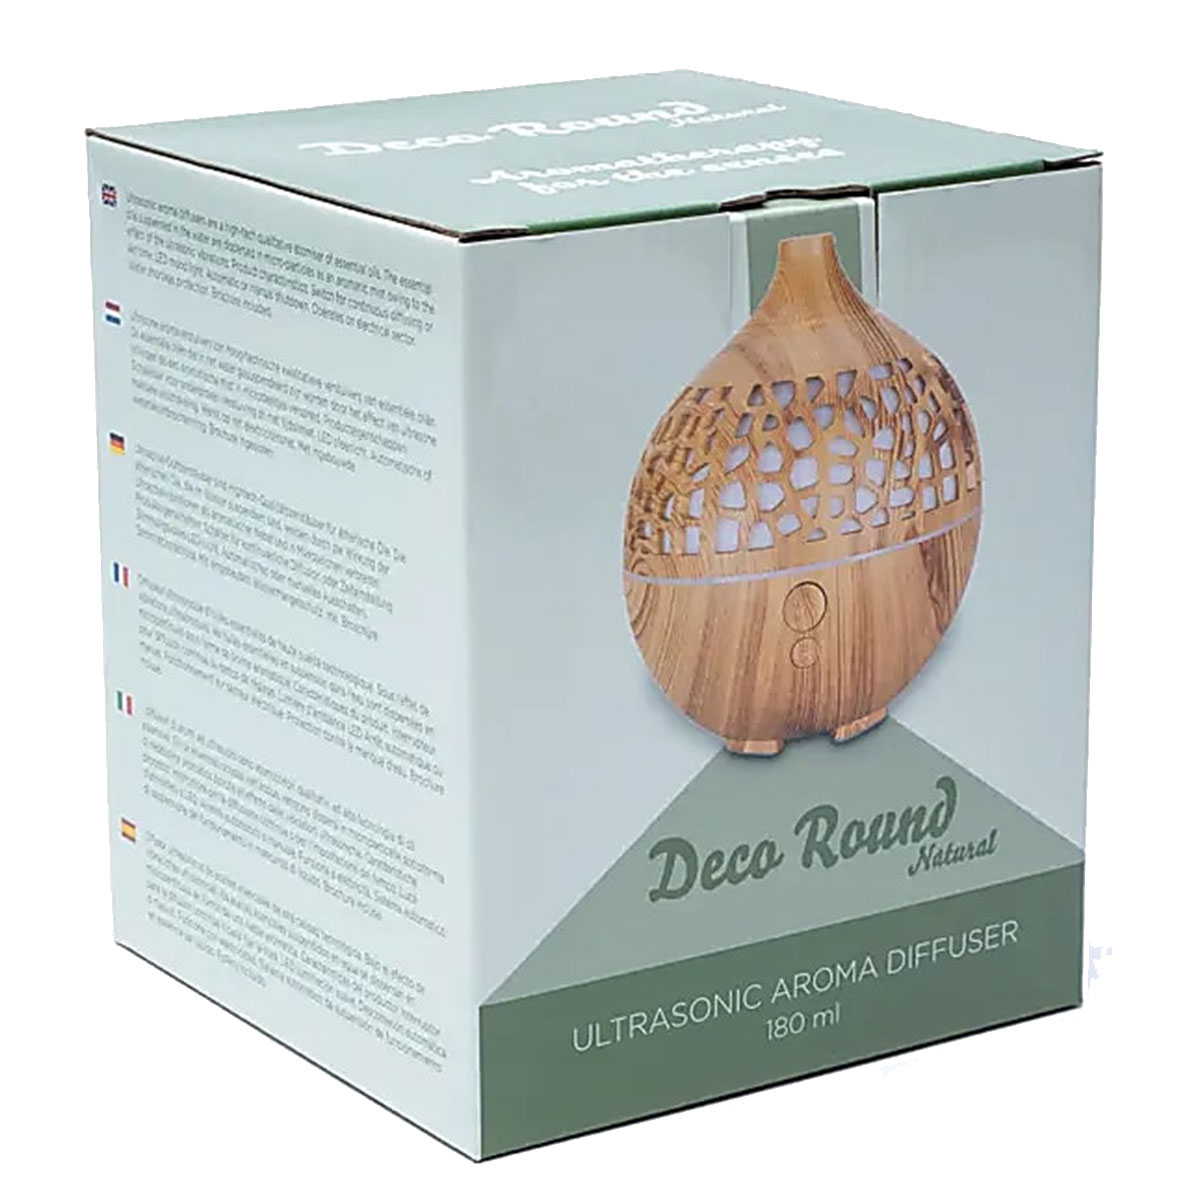 Ultrasonic luminous essential oil diffuser